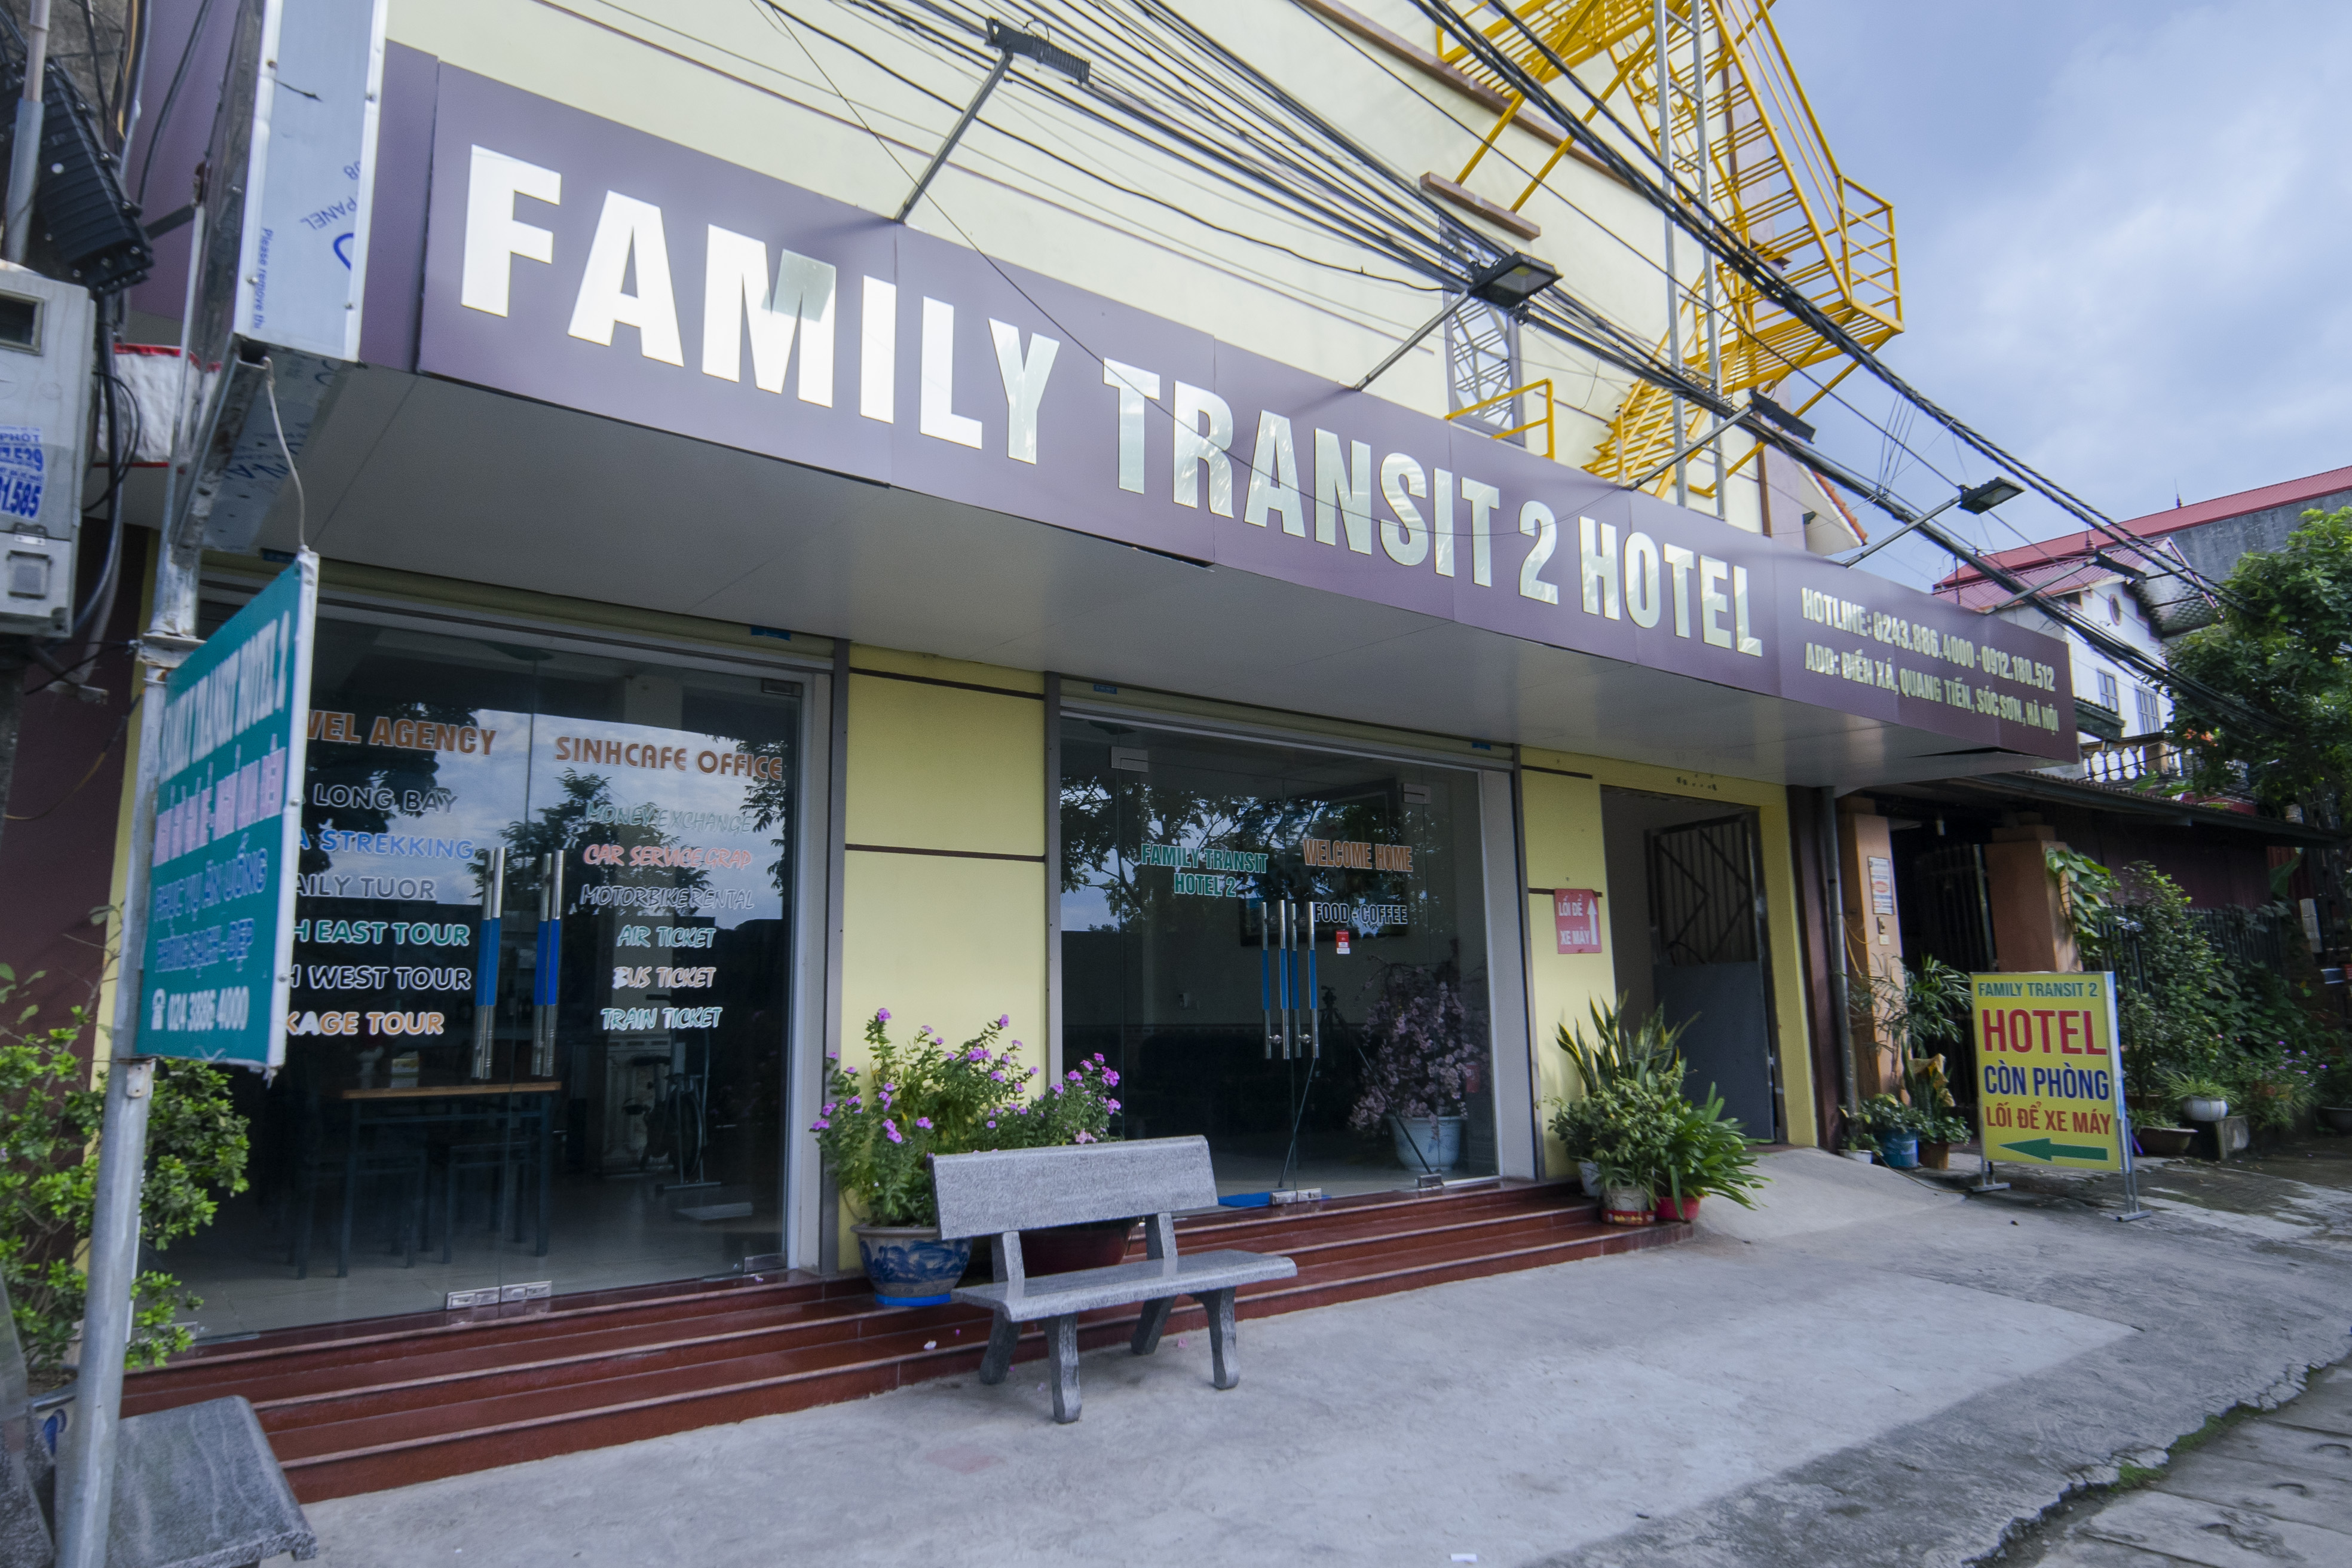 Family Transit Hotel 2